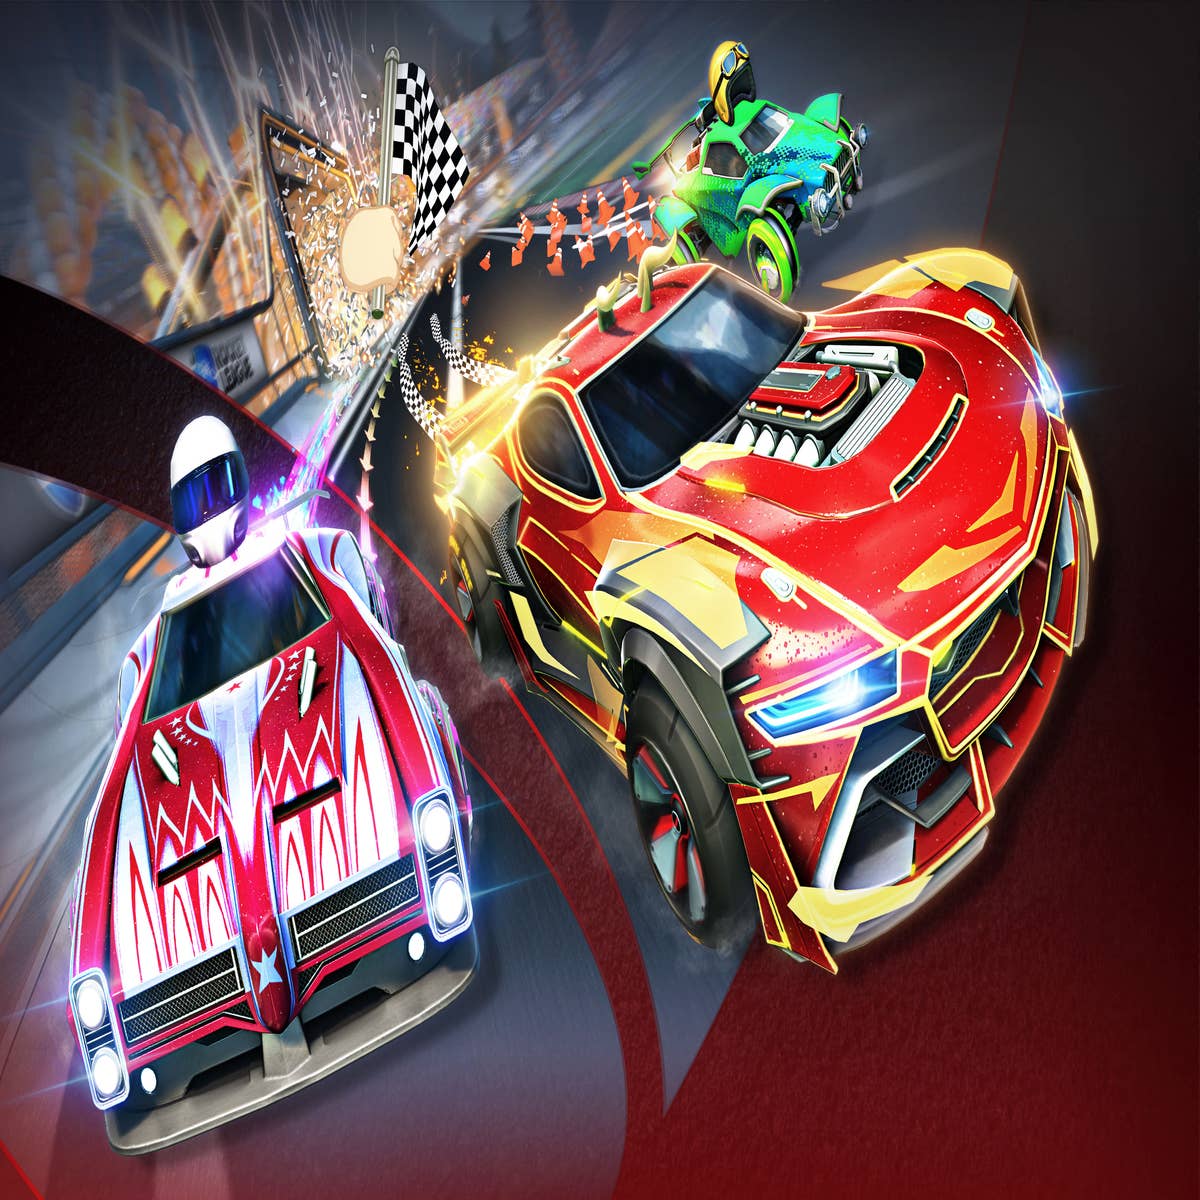 Gratis Xbox Live Codes : r/racing